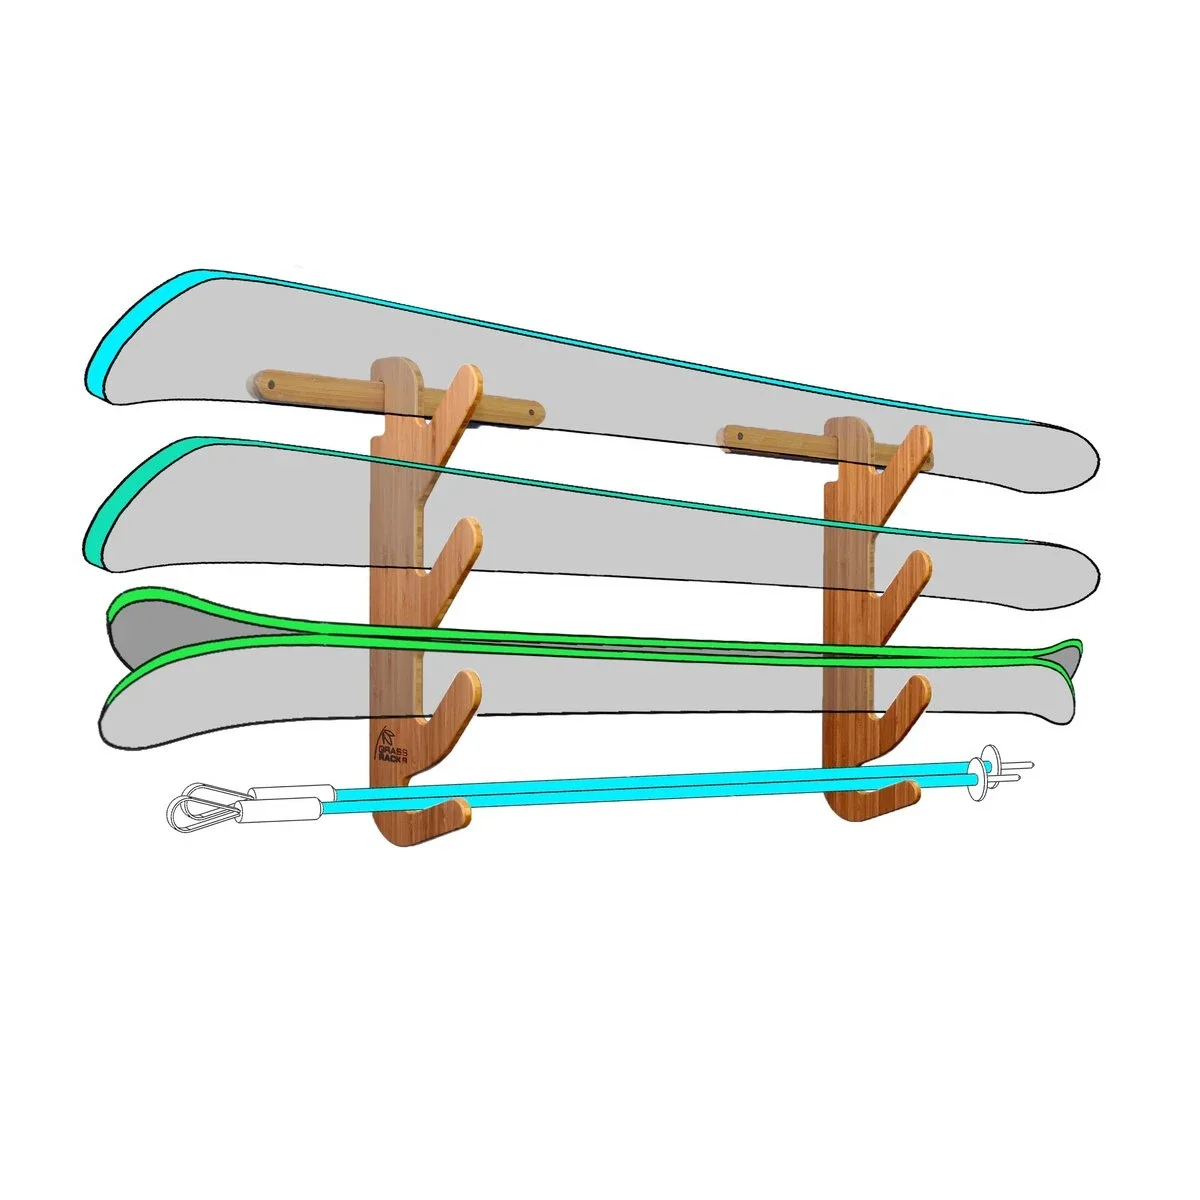 Ski Rack | Paddle Rack | Horizontal Wall-Mounted Indoor Ski Storage - The Hallsteiner Series